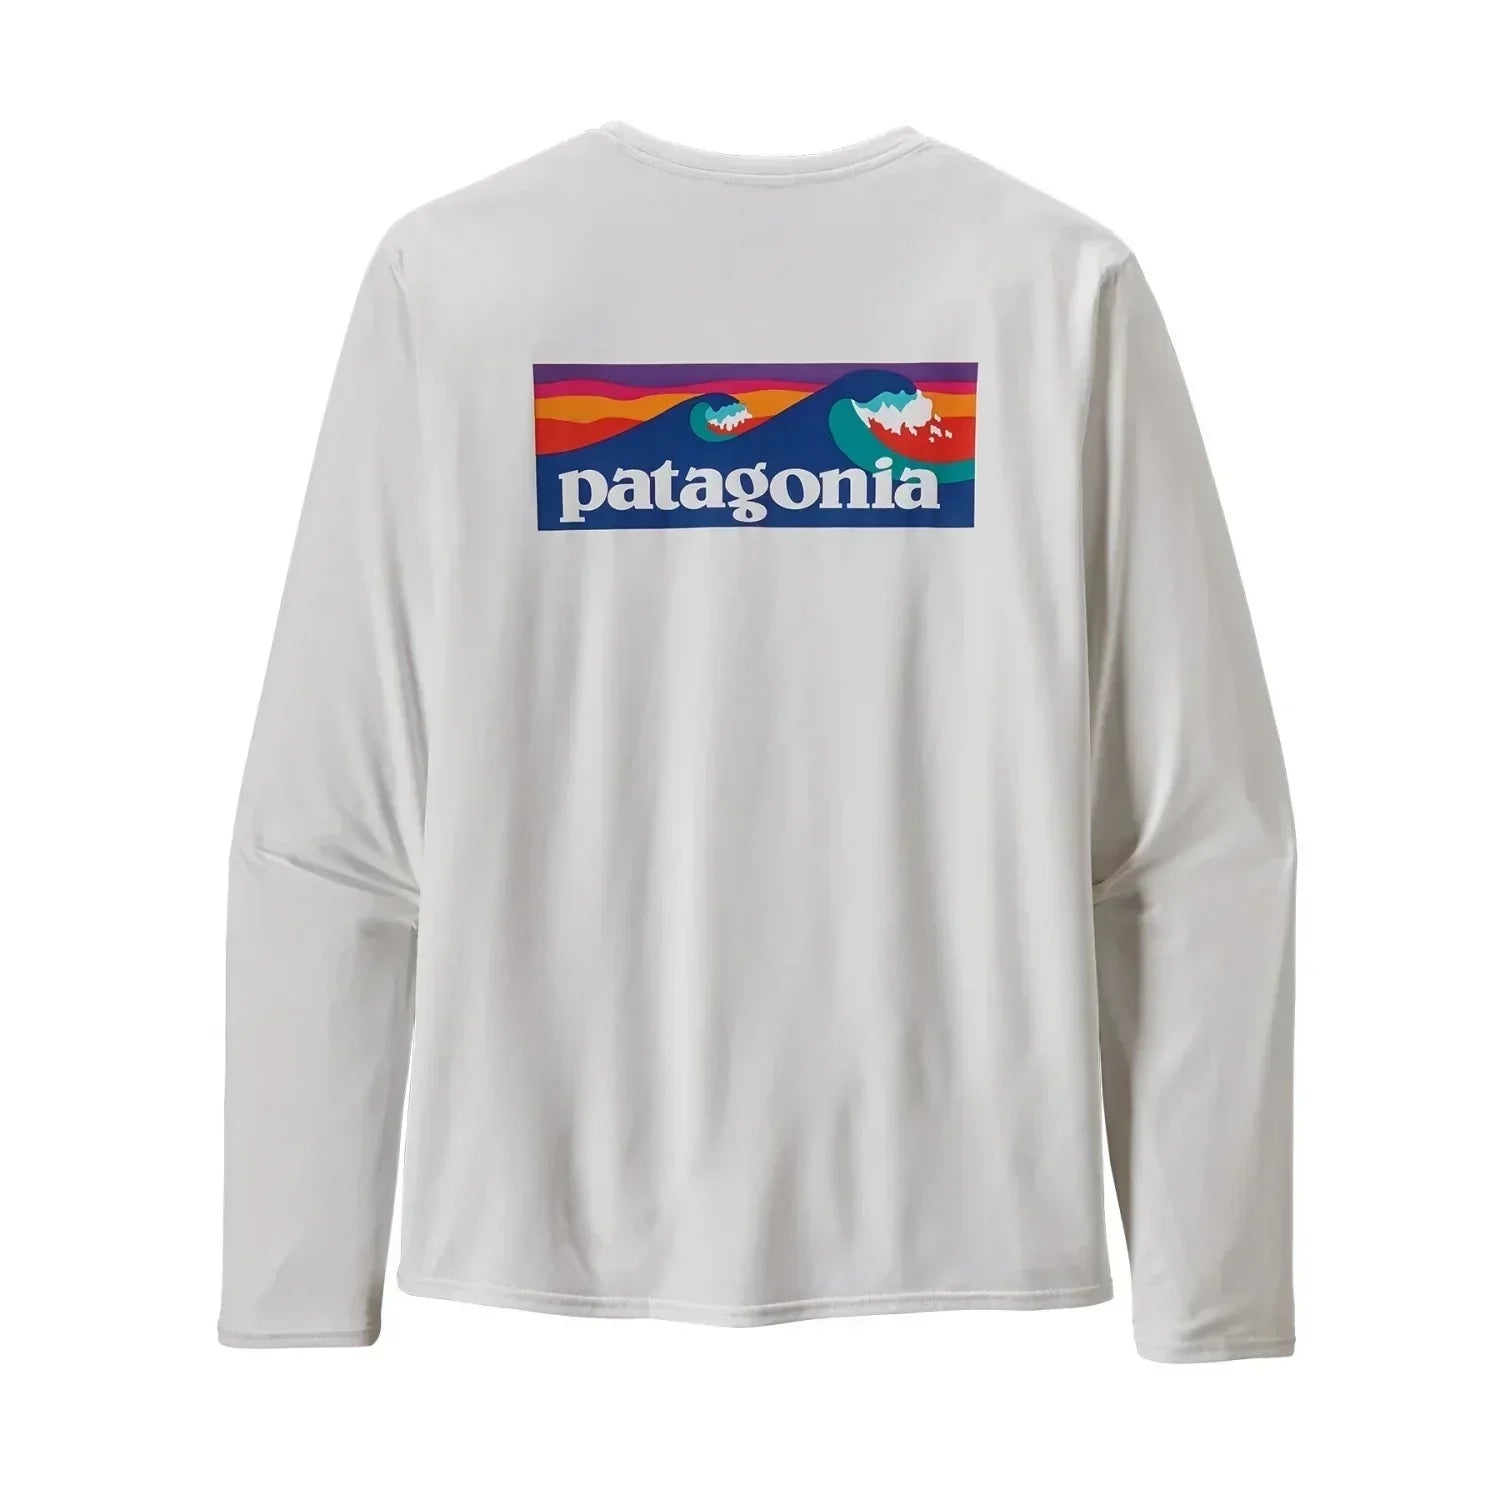 Patagonia 05. M. SPORTSWEAR - M. LS SHIRTS Men's Long Sleeve Capilene Cool Daily Graphic Shirt - Waters BOLW BOARDSHORT LOGO|WHITE